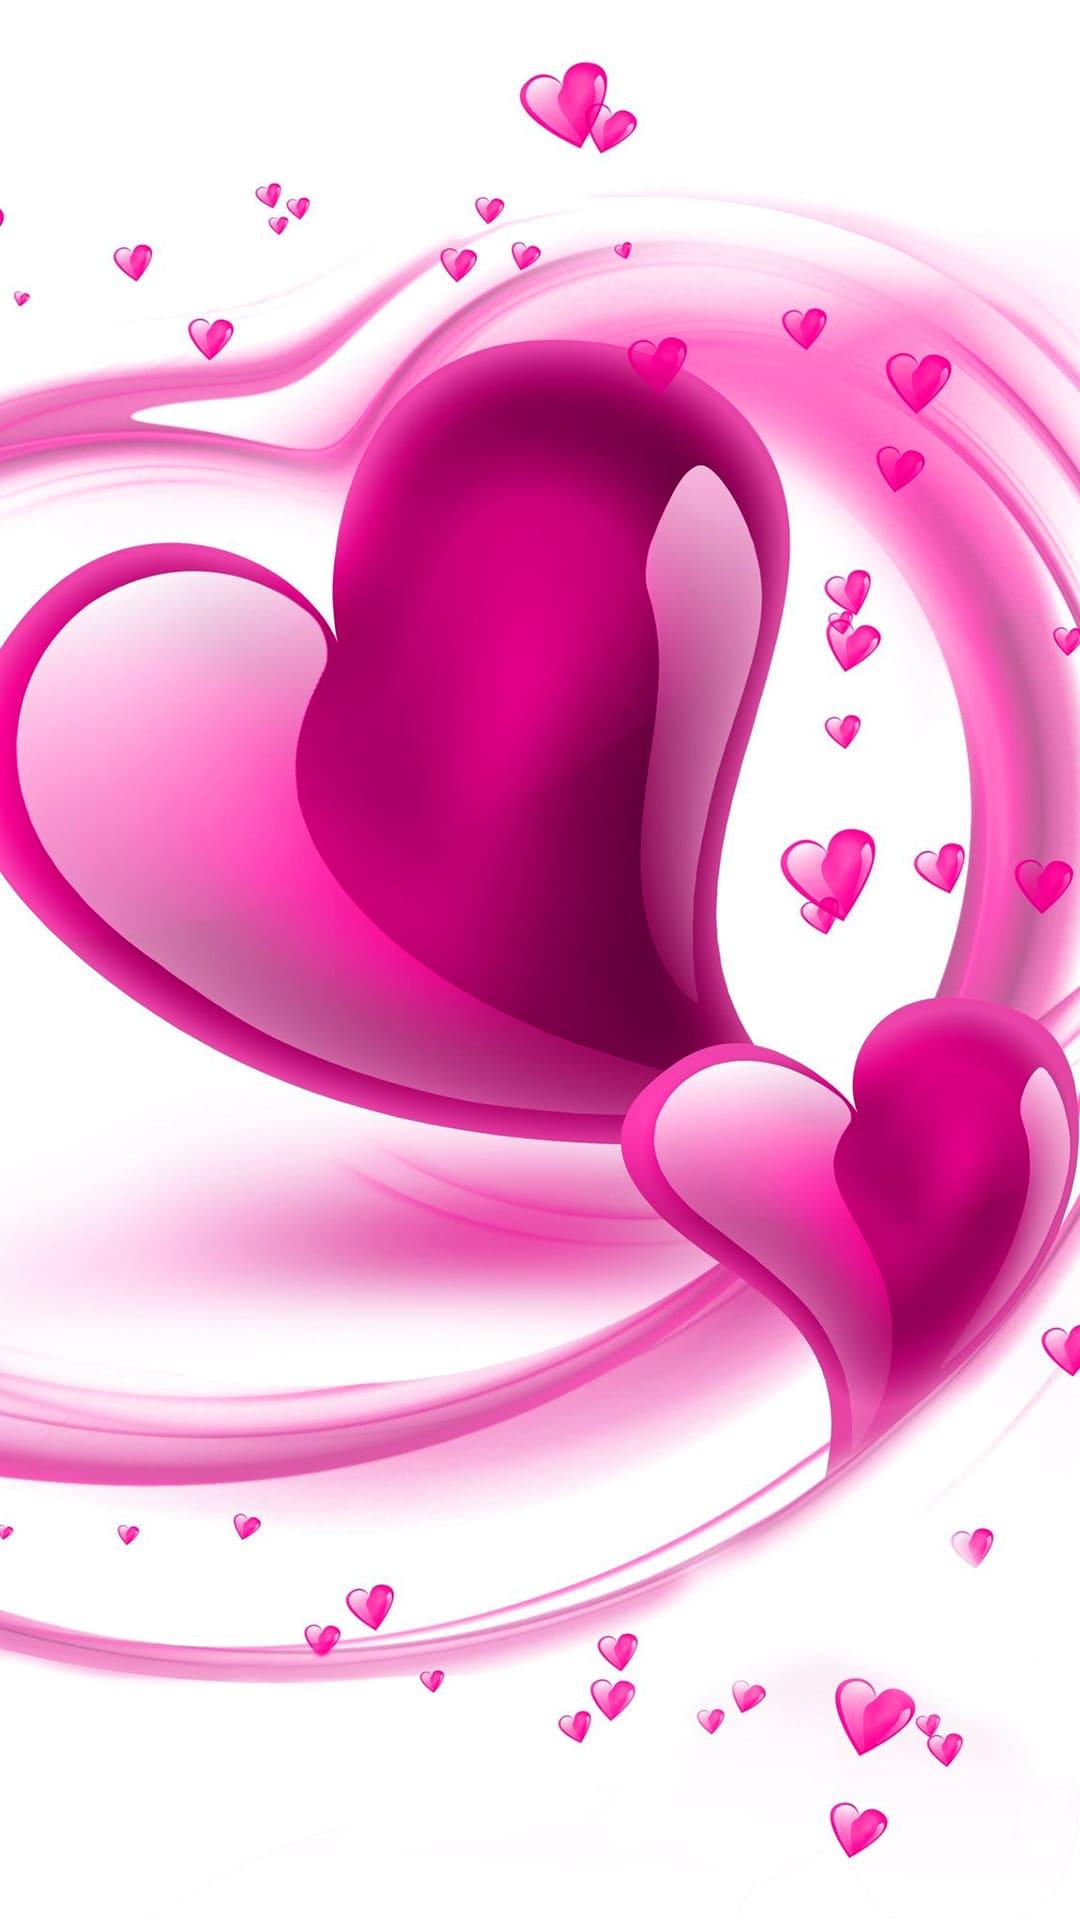 Love Heart Wallpaper - TubeWP